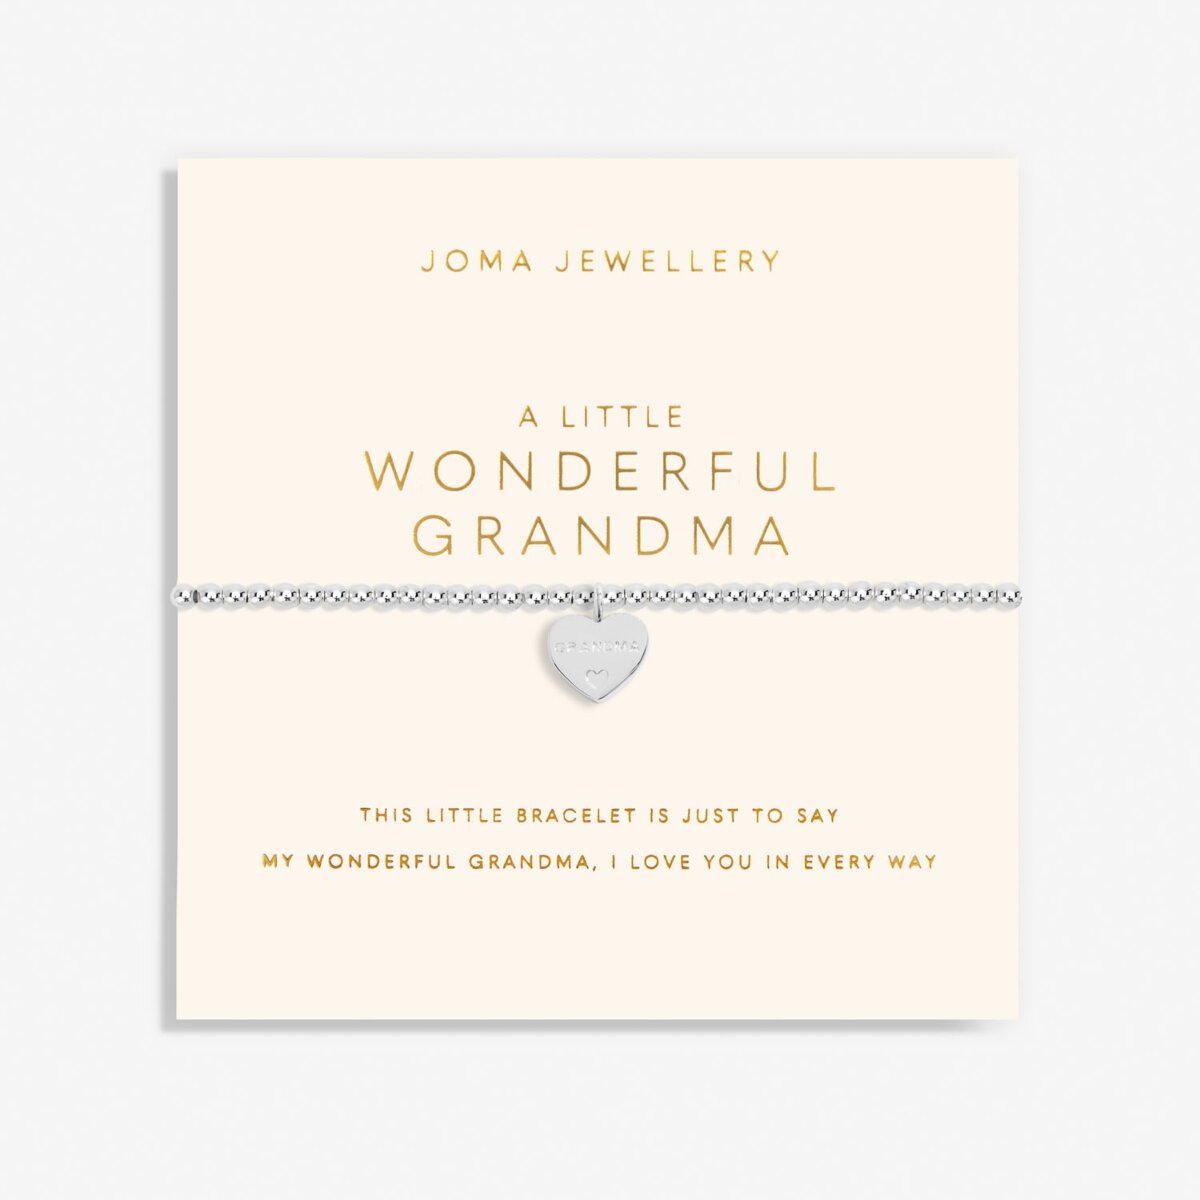 JOMA JEWELLERY | MOTHER'S DAY GRANDPARENT A LITTLE | WONDERFUL GRANDMA BRACELET